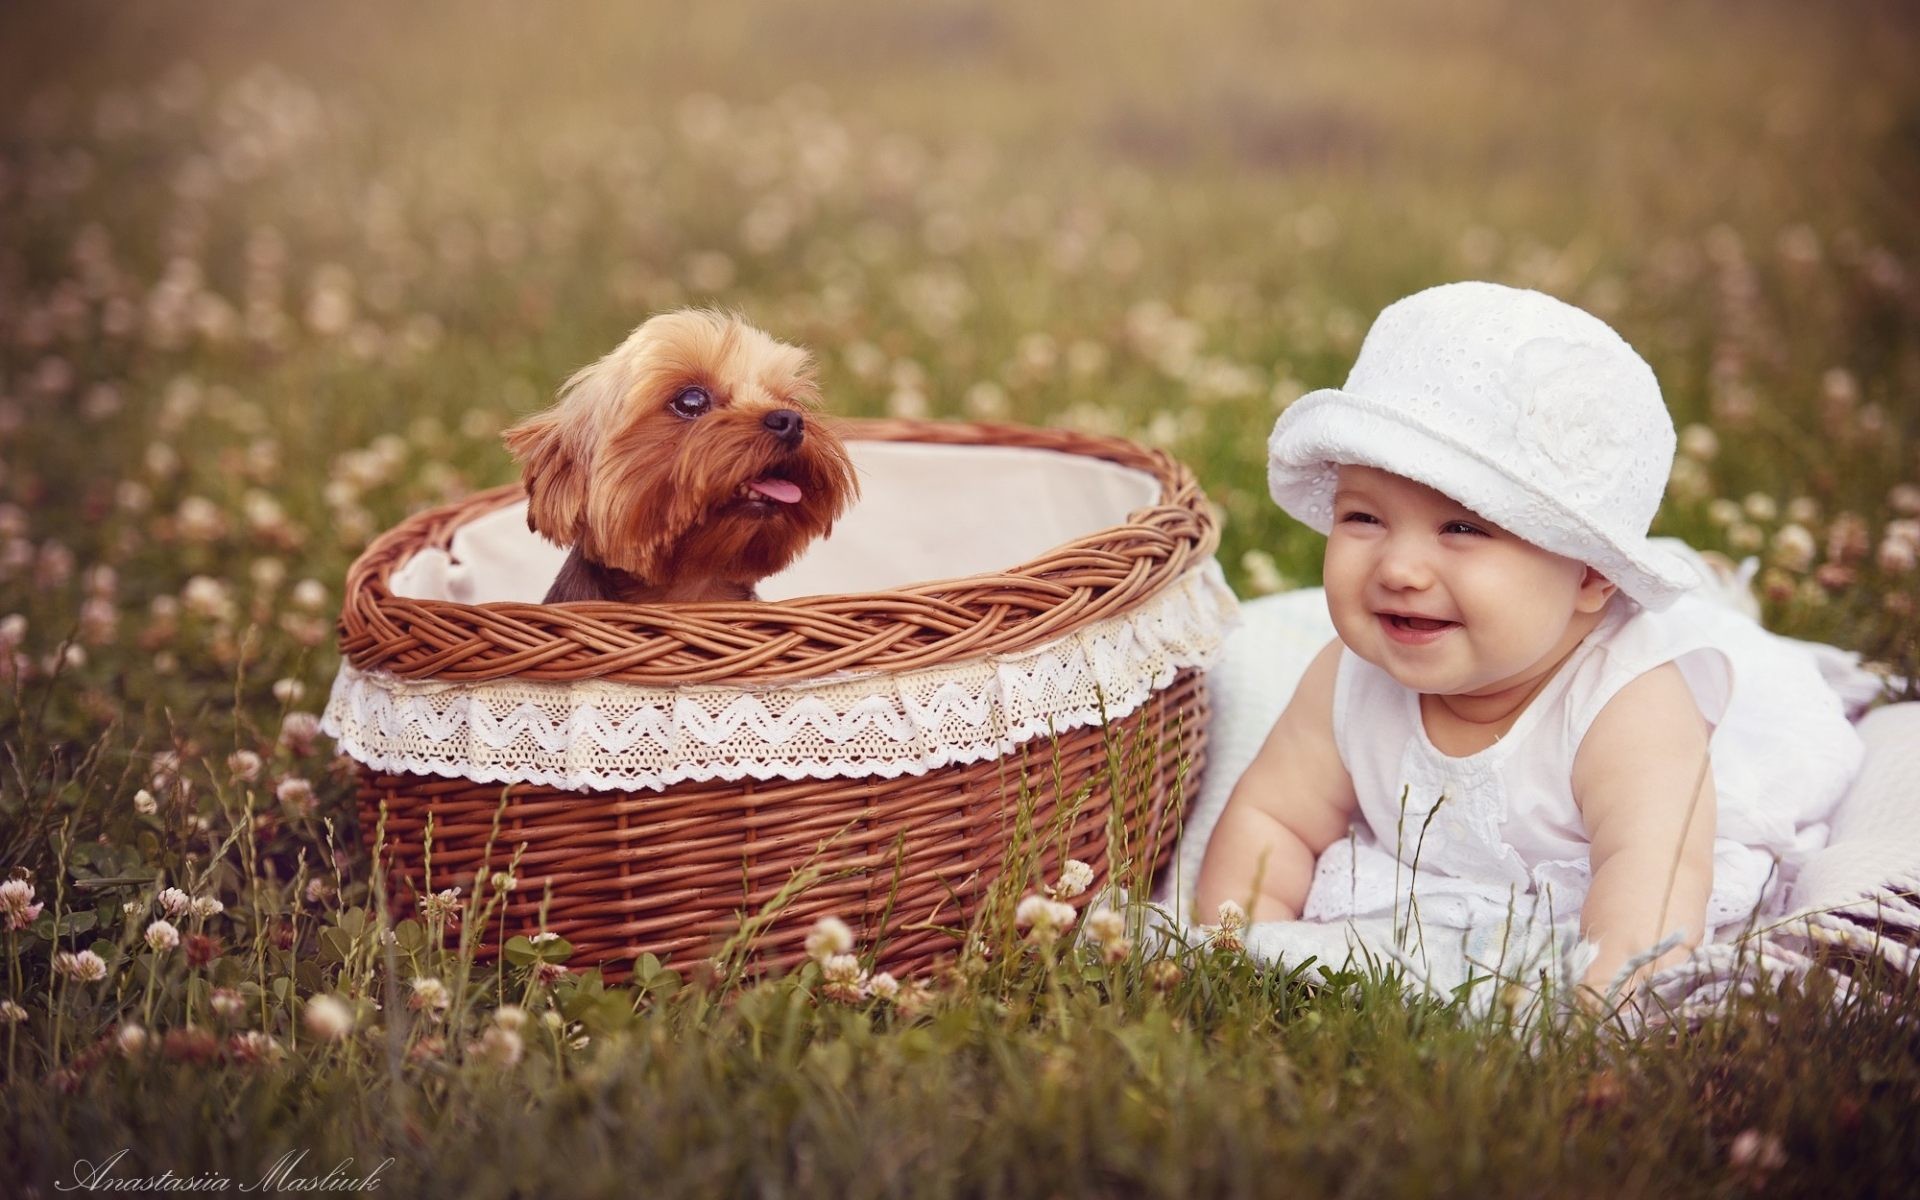 1920x1200 Dog and Cute Baby Wallpaper . Check out more @ wallpaperxhd.com